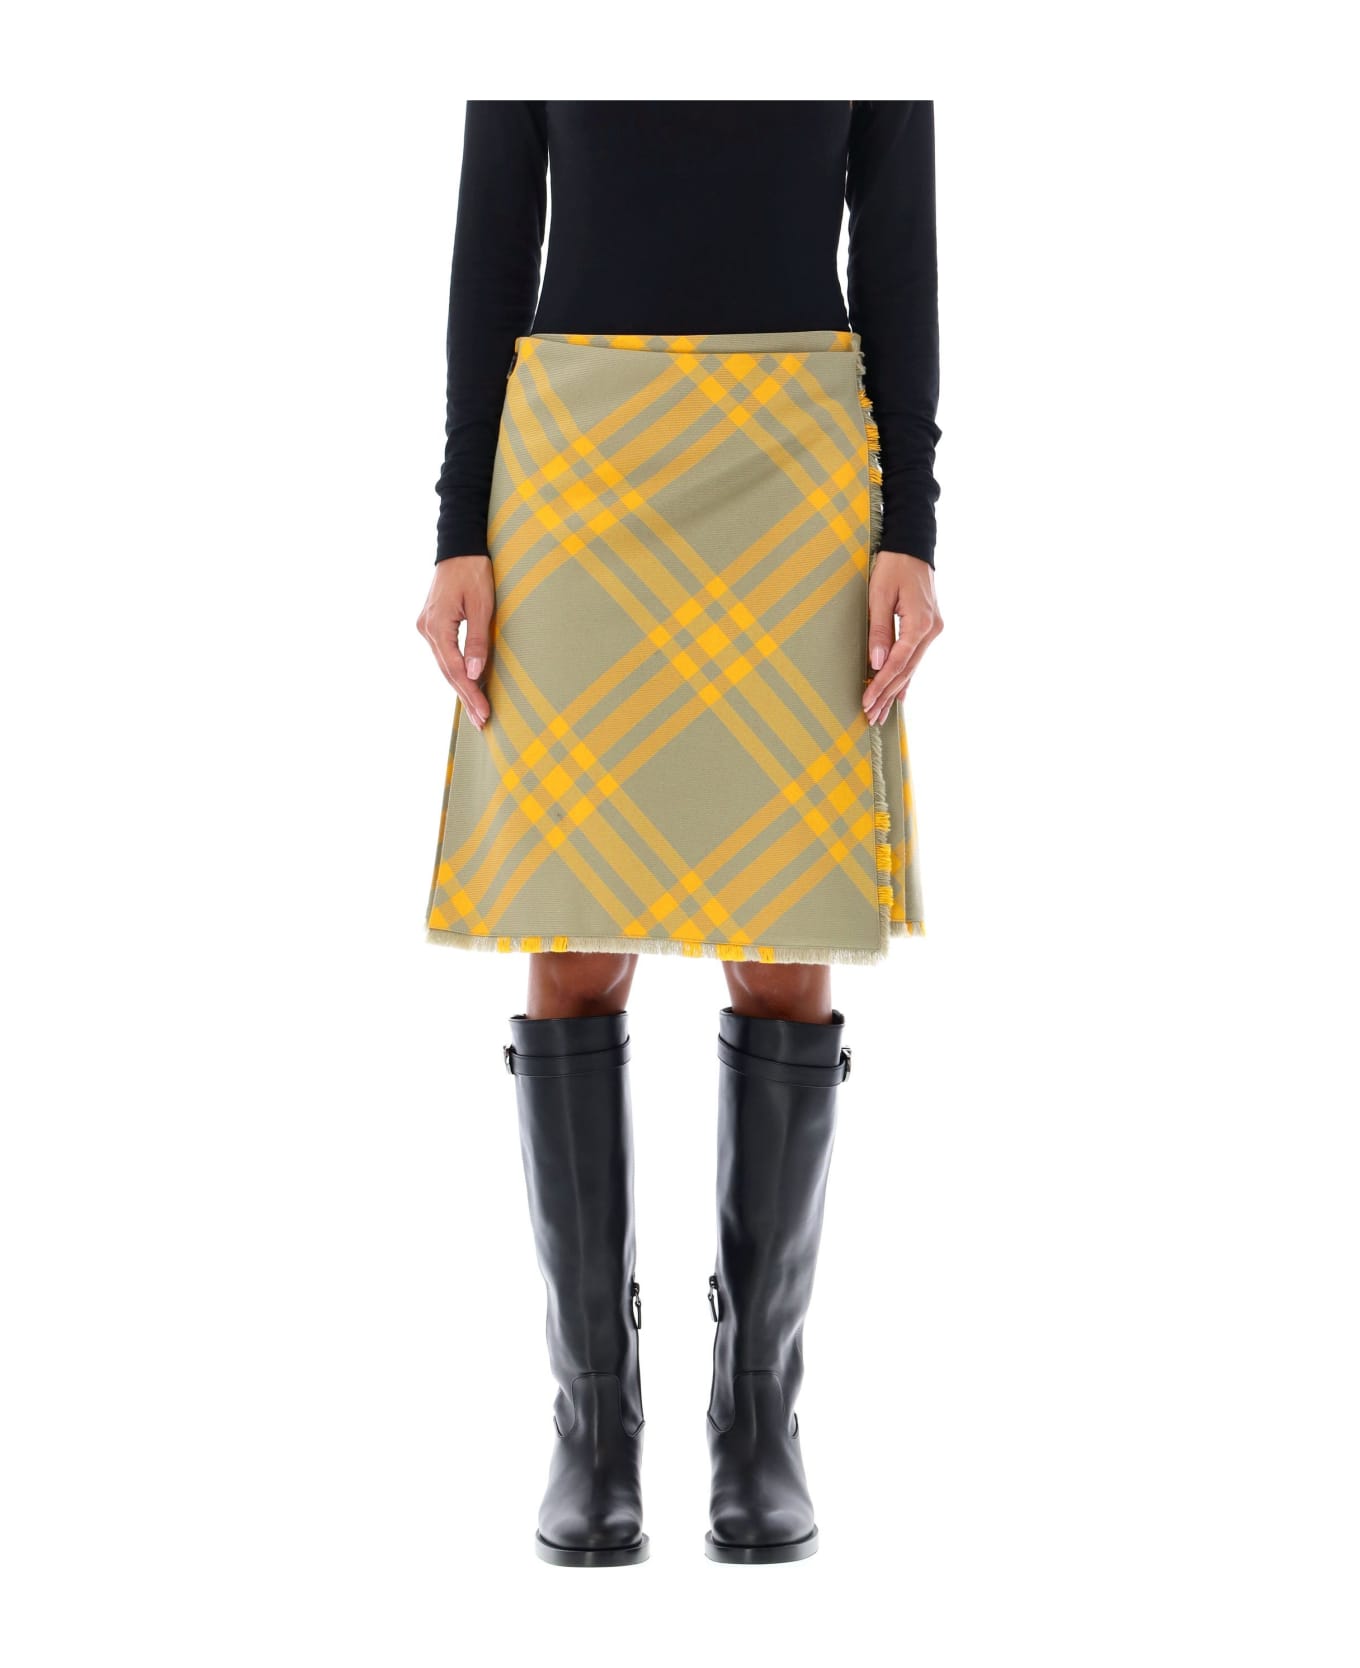 Burberry London Check Wool Blend Kilt - HUNTER YELLOW CHECK スカート